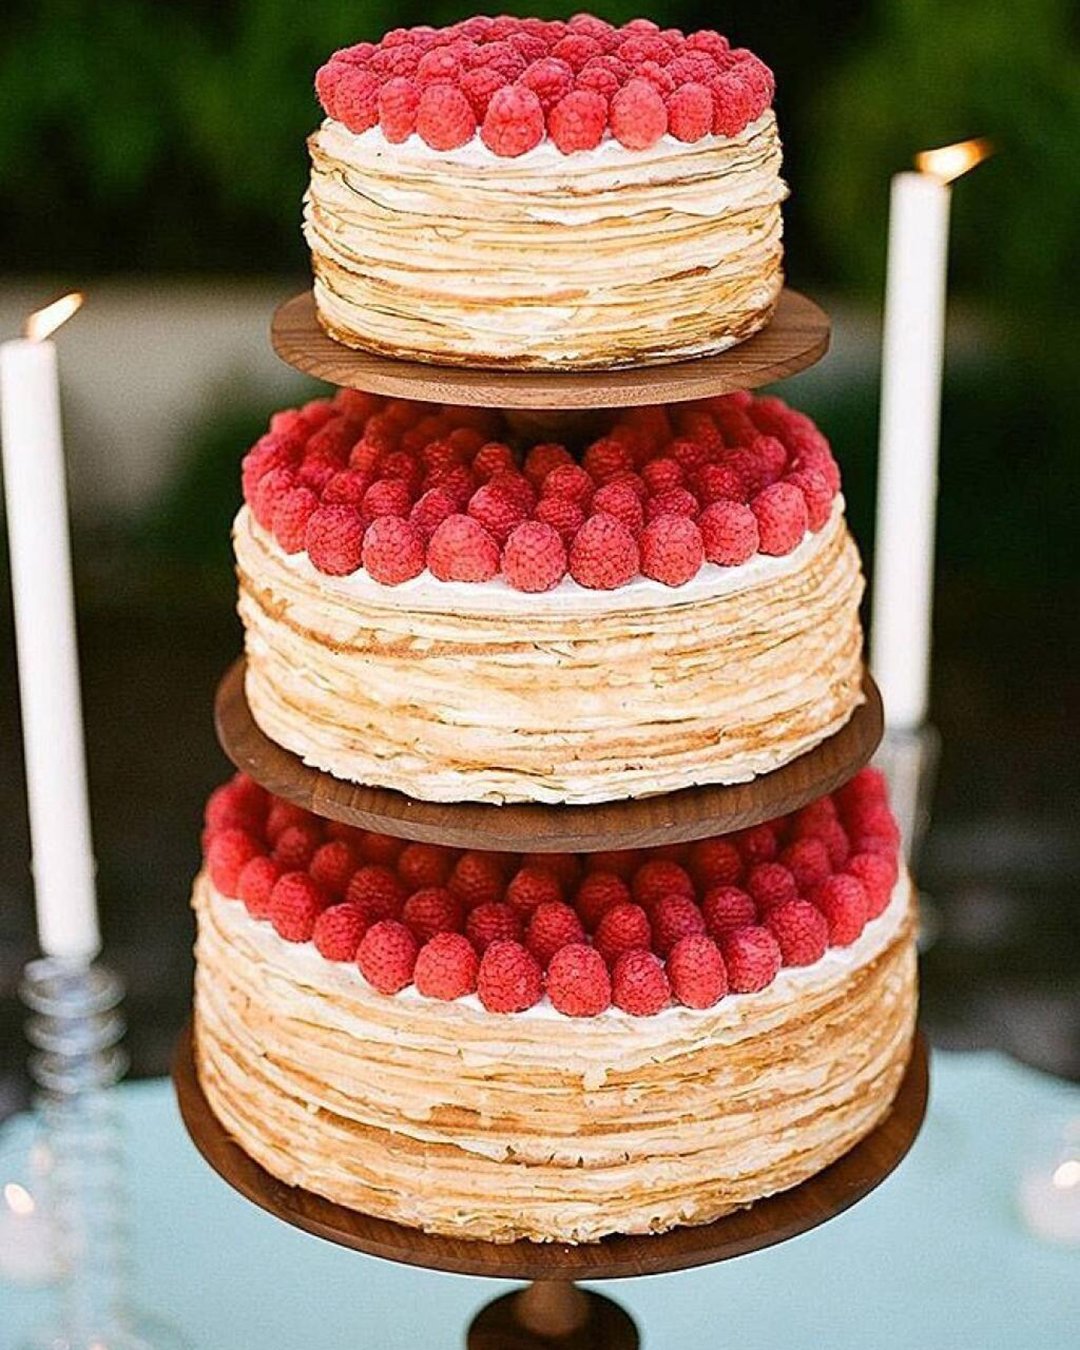 wedding cake alternatives crepe cake three tiered with strawberries trendy bride wedding magazine via instagram